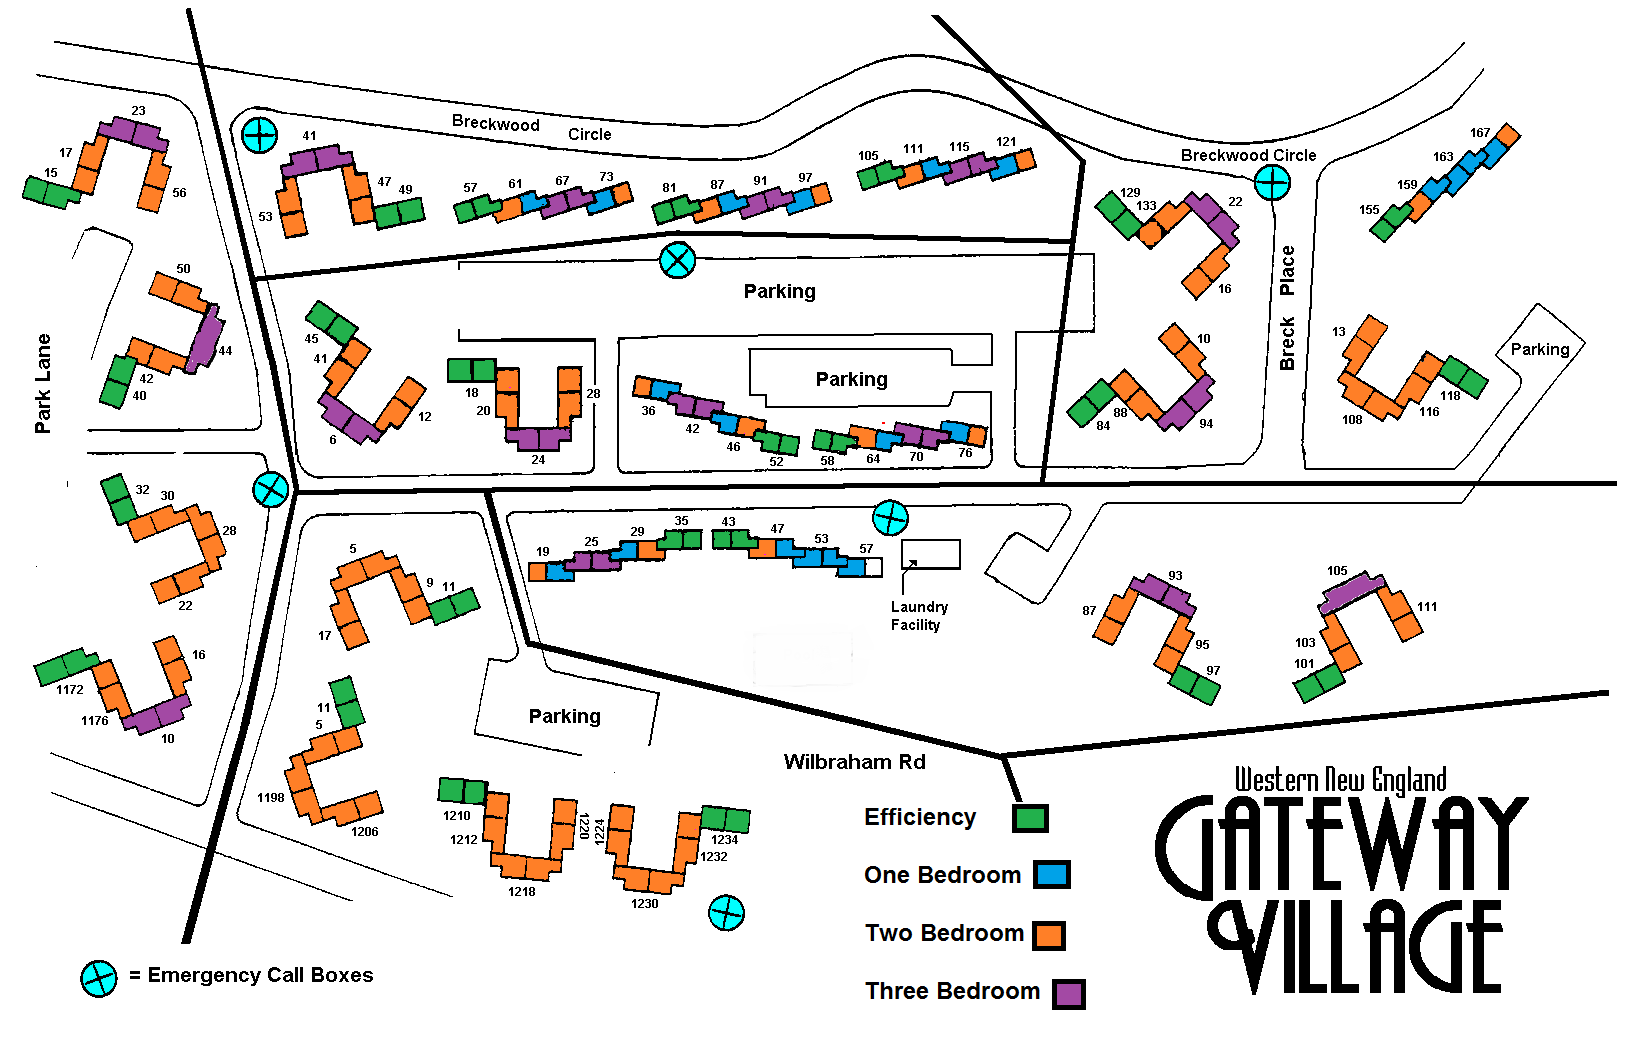 GW Village Map